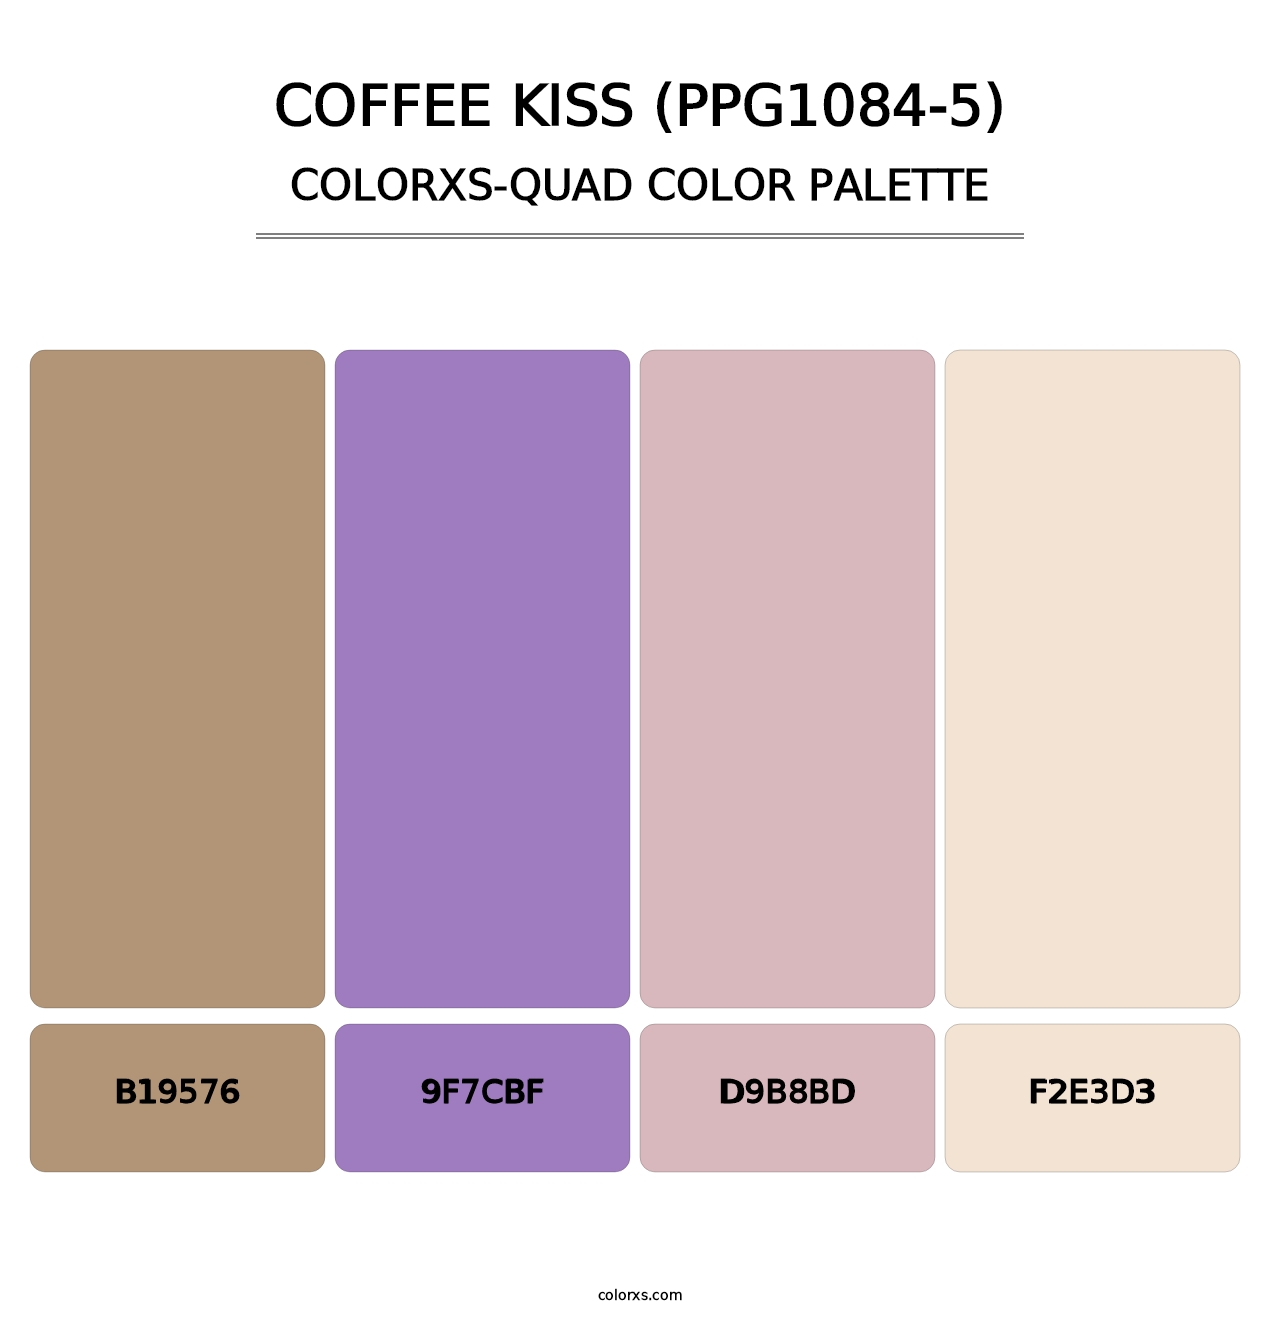 Coffee Kiss (PPG1084-5) - Colorxs Quad Palette